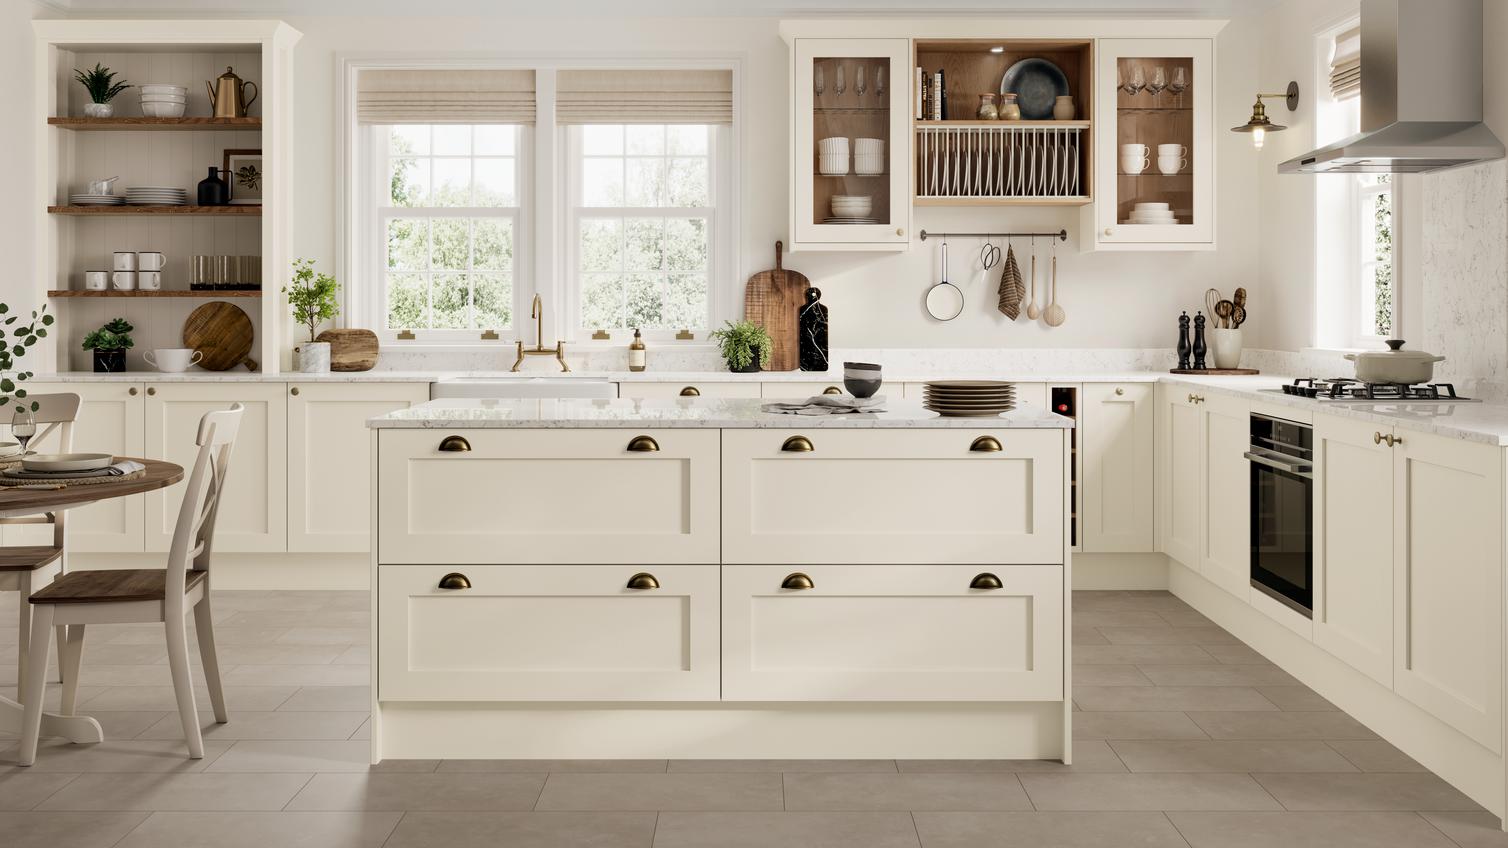 A cream-coloured, Linen shaker kitchen in an island layout. It has brass accessories, quartz worktop, and tile flooring.